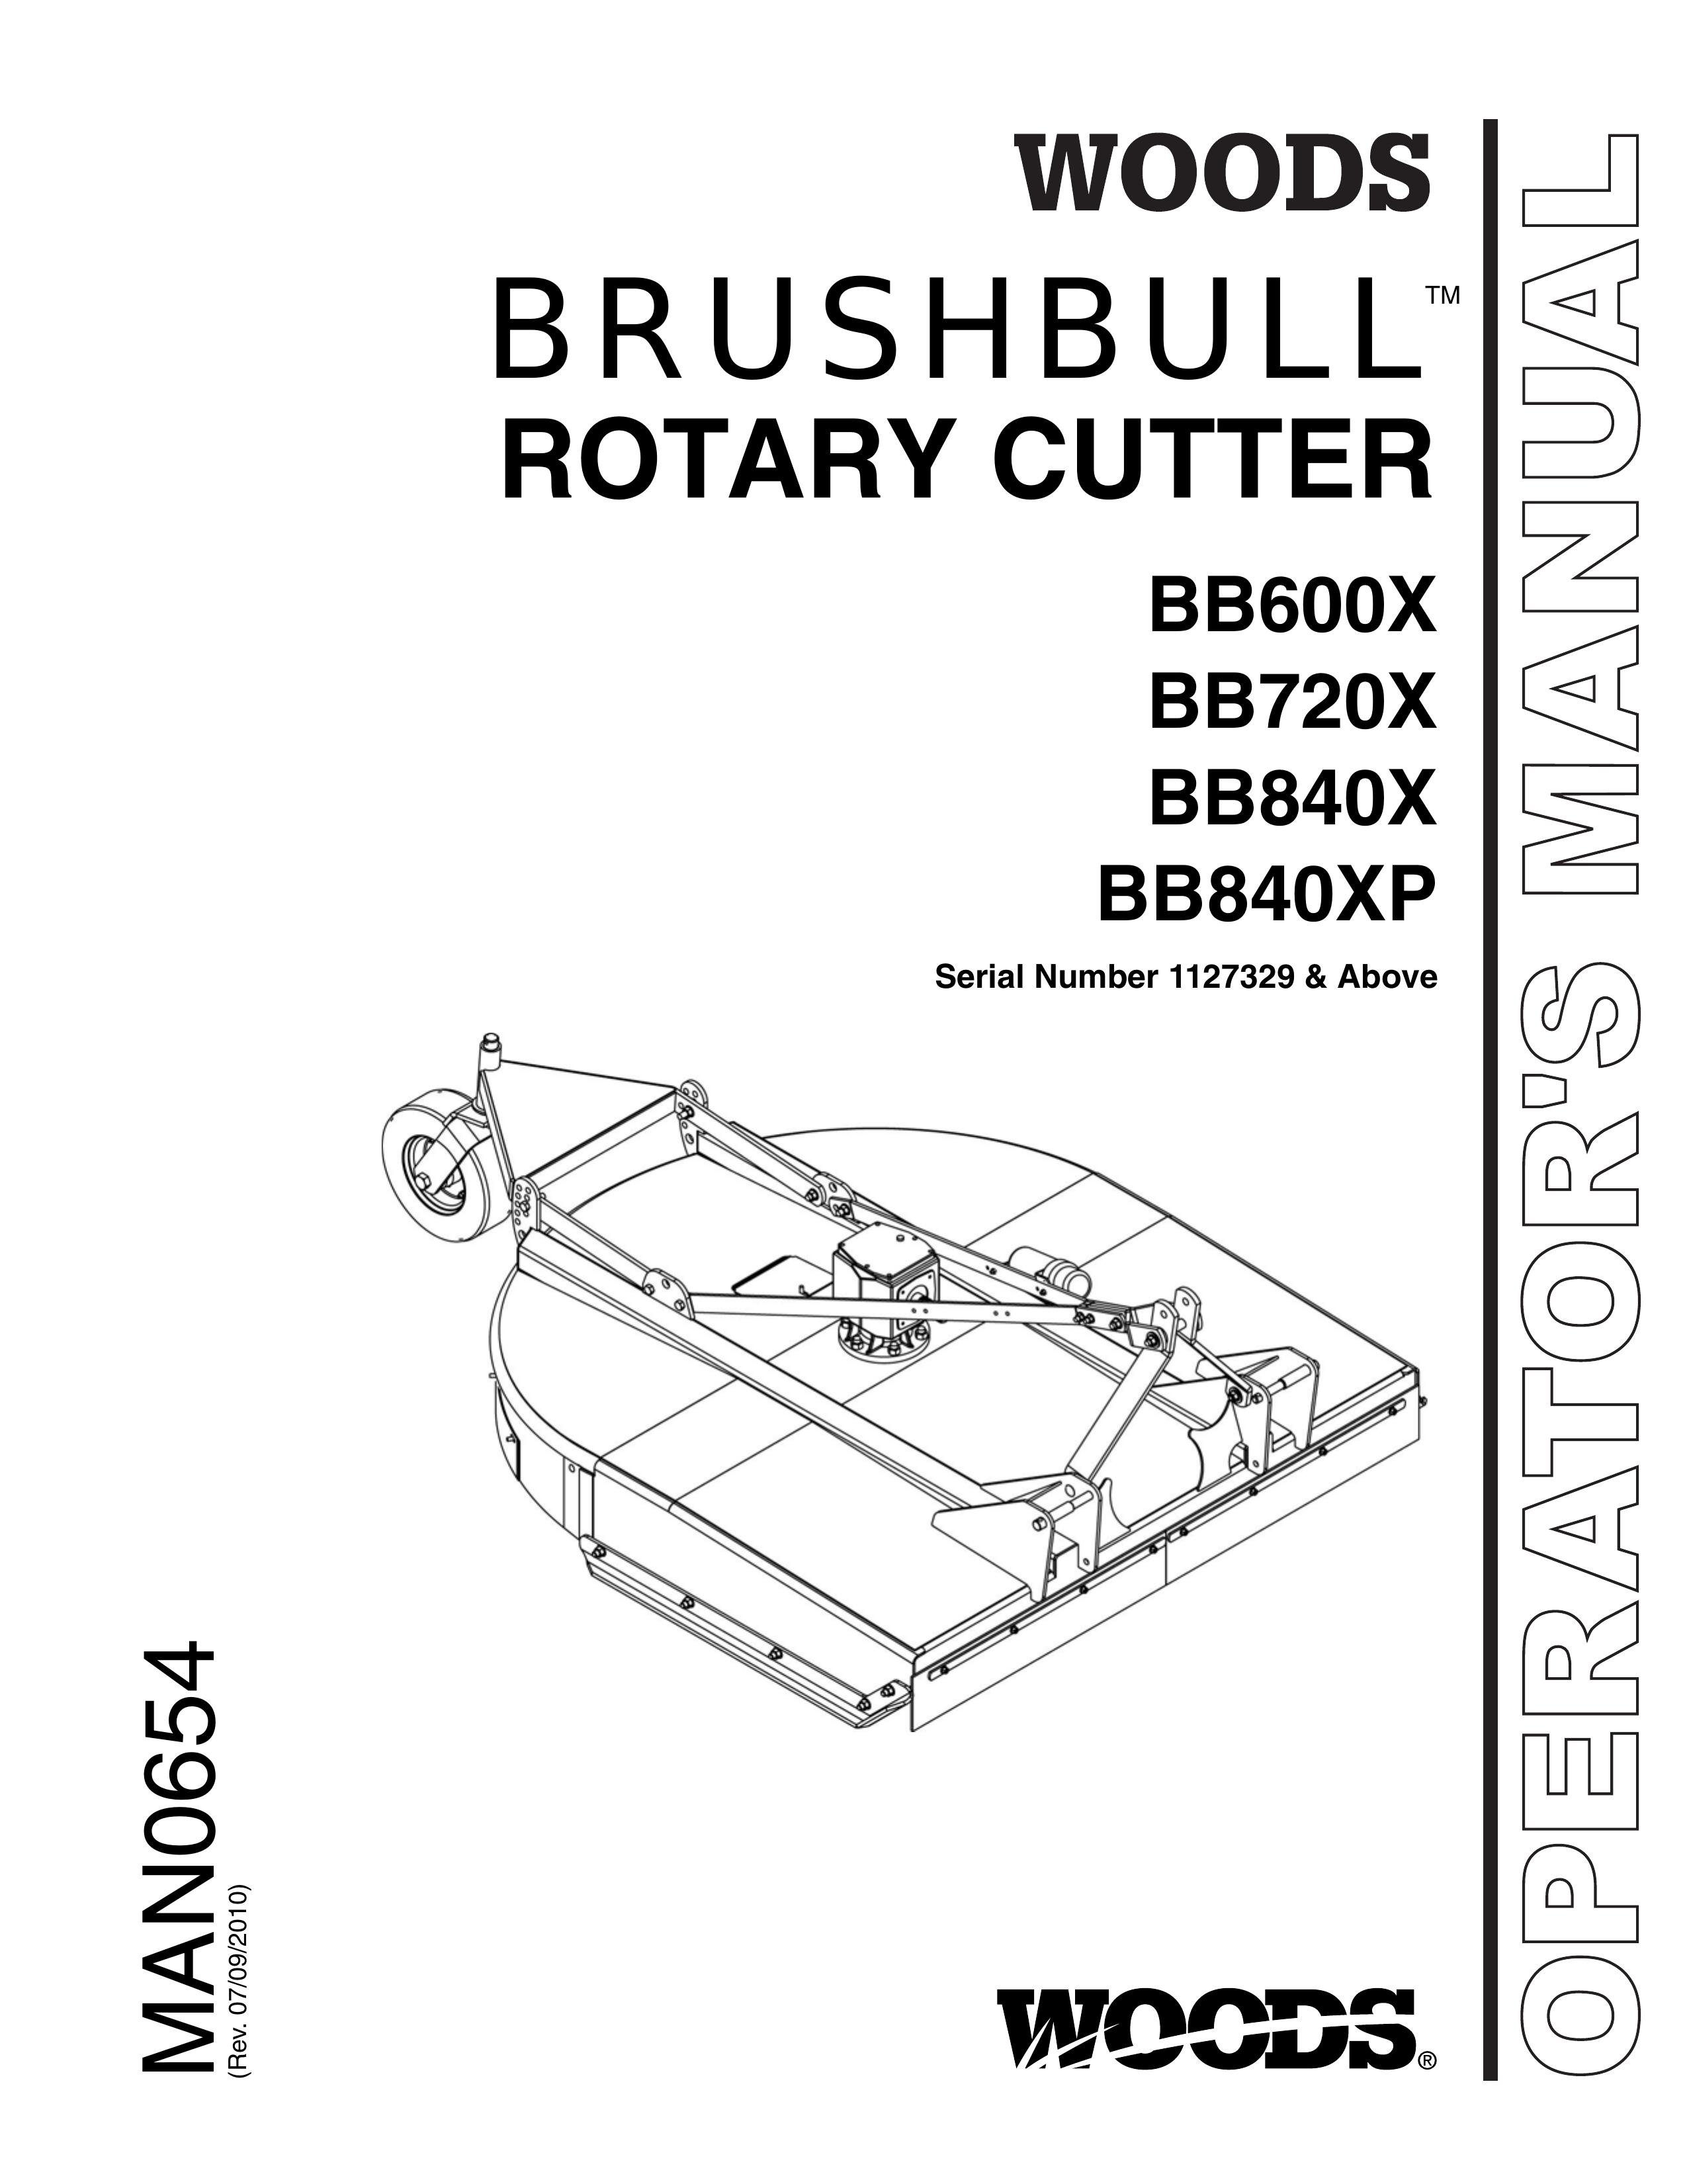 Woods Equipment BB840XP Brush Cutter User Manual